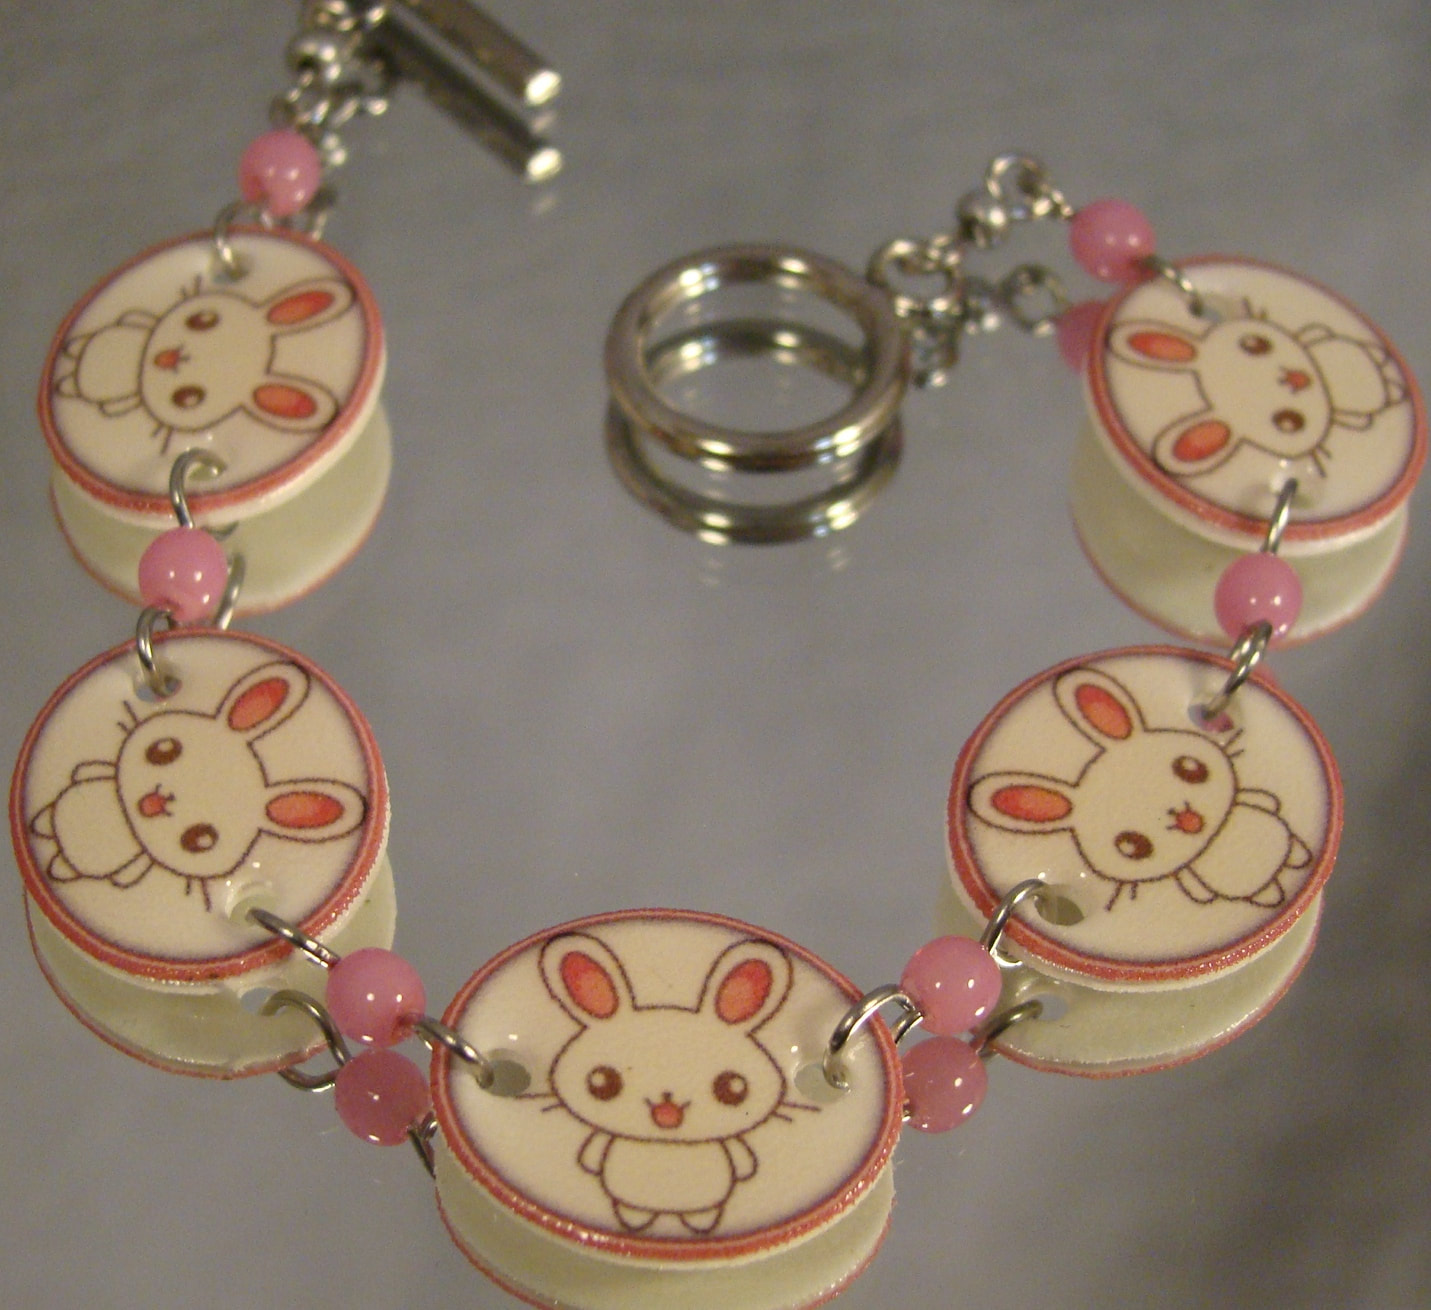 Anime Bunny Bracelet - Cartoon Rabbit accessories